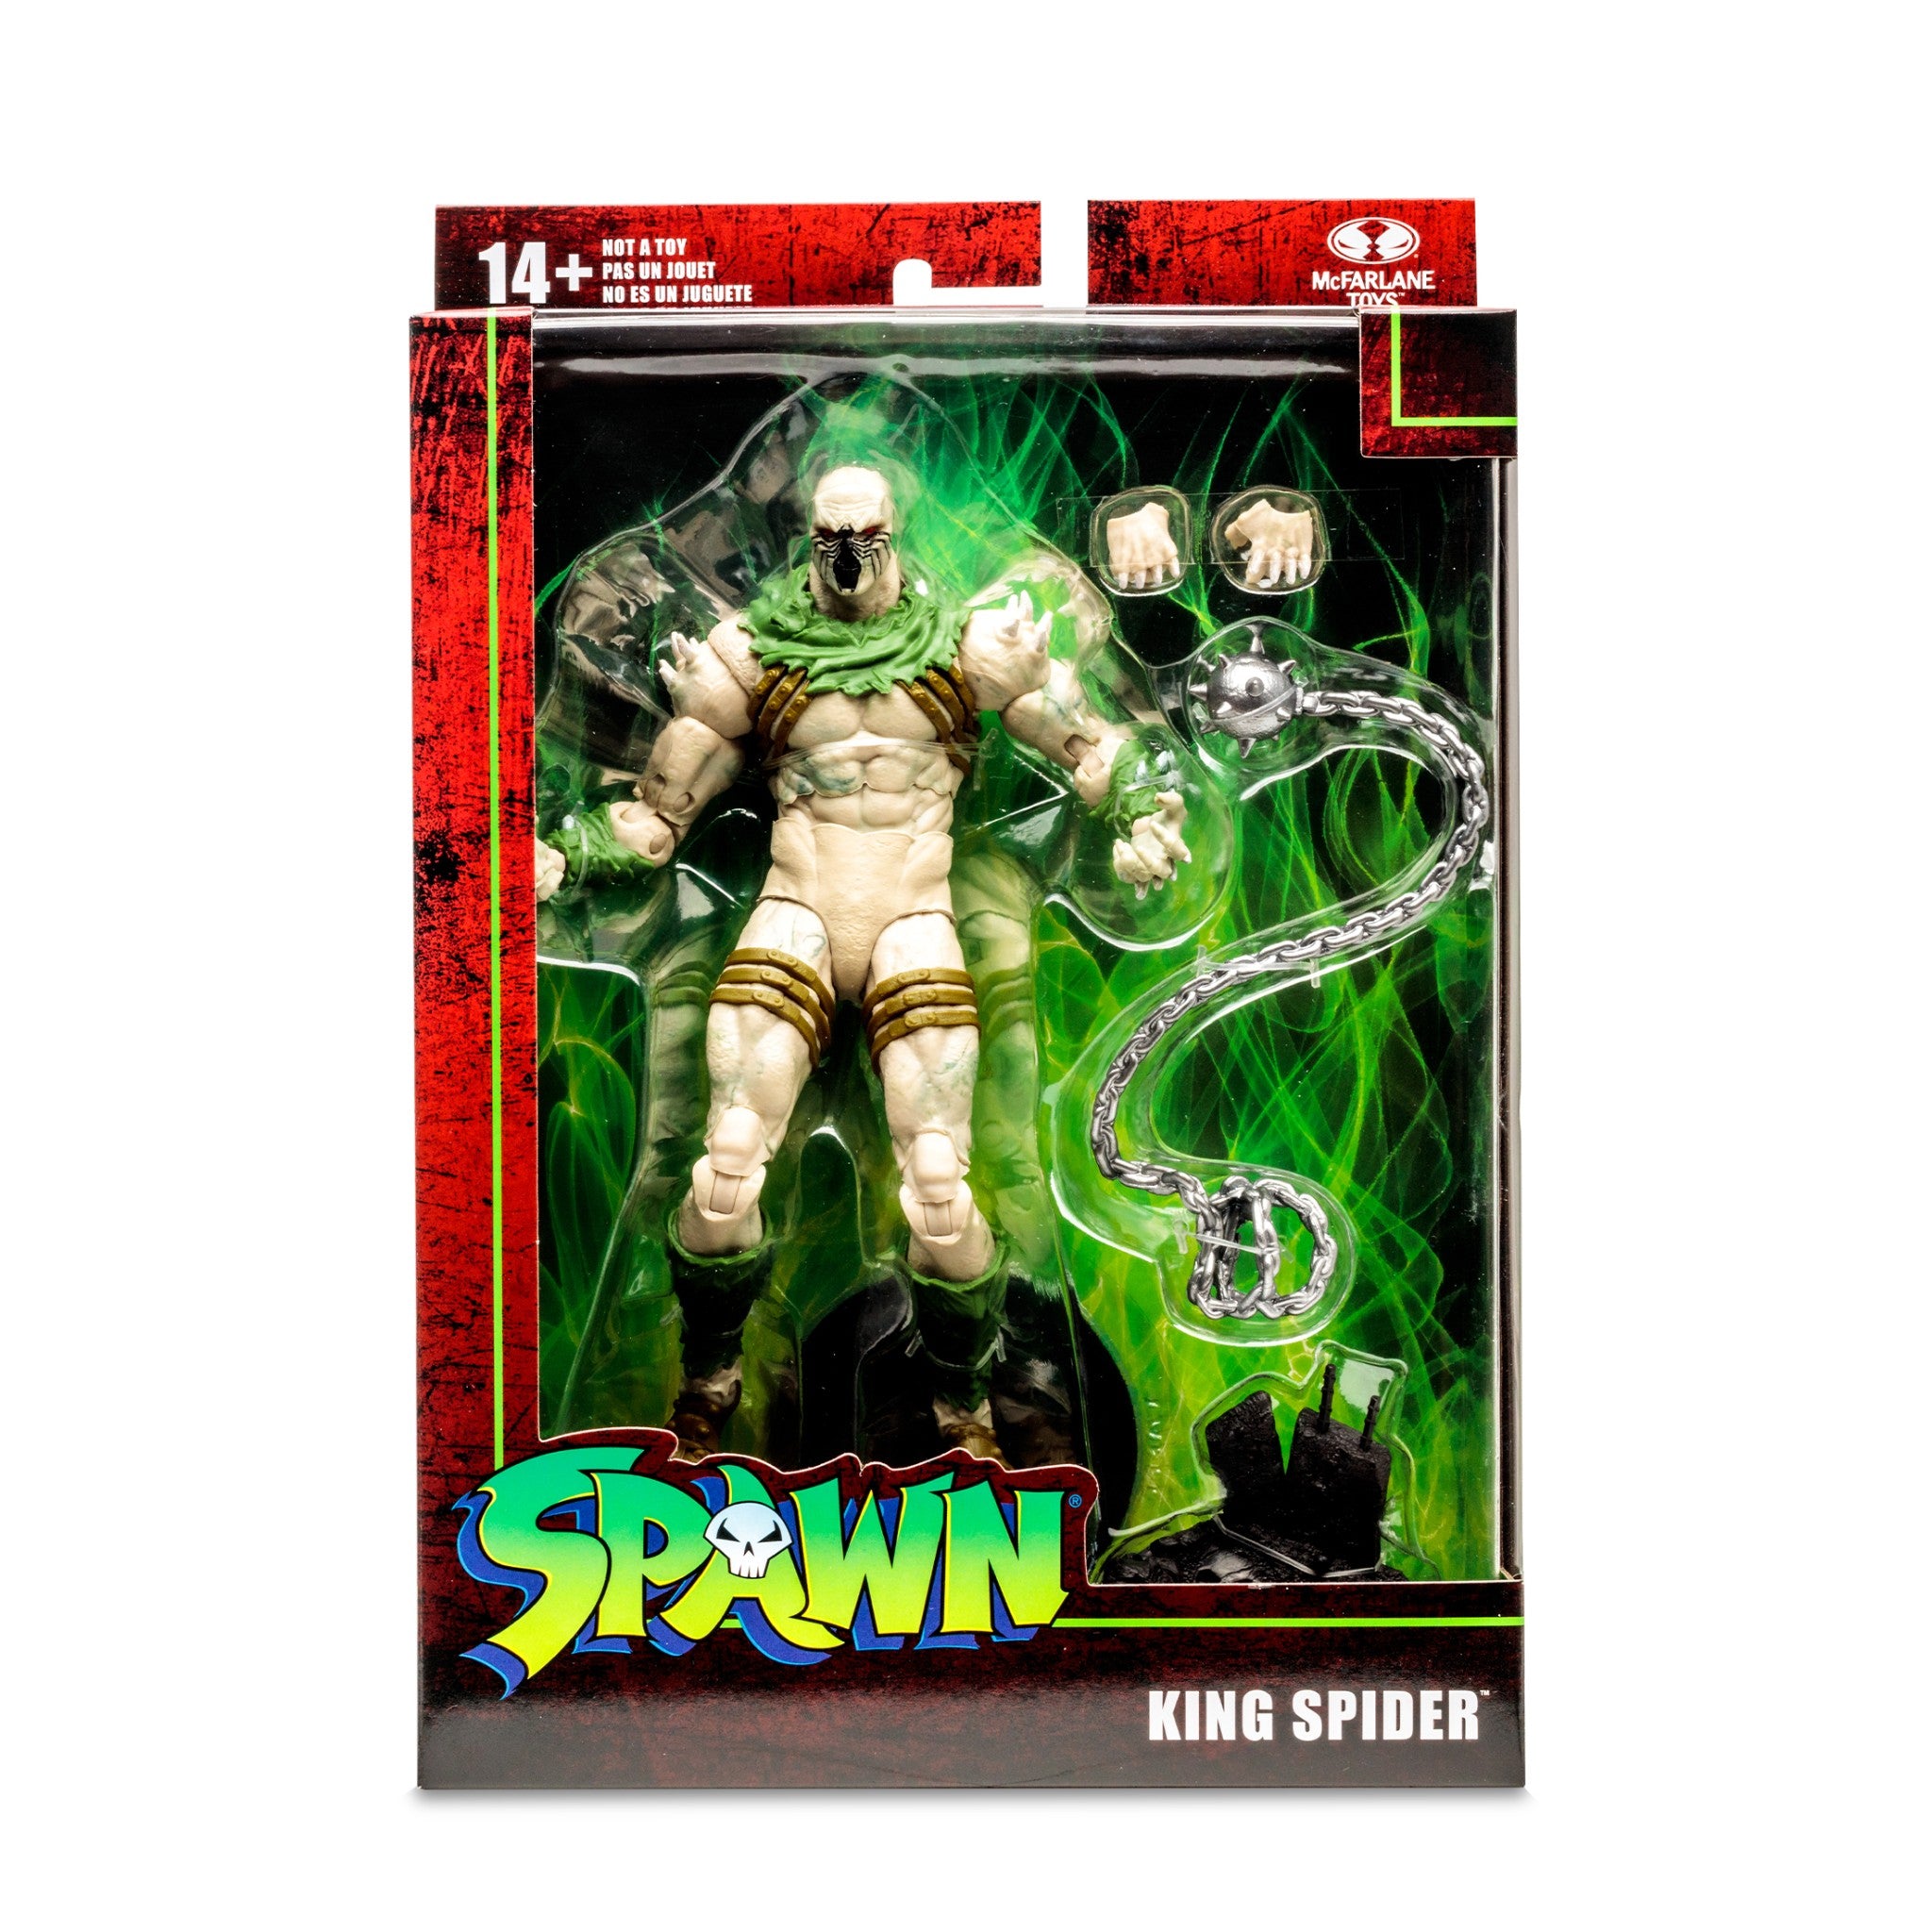 Spawn King Spider 7" Action Figure - McFarlane Toys